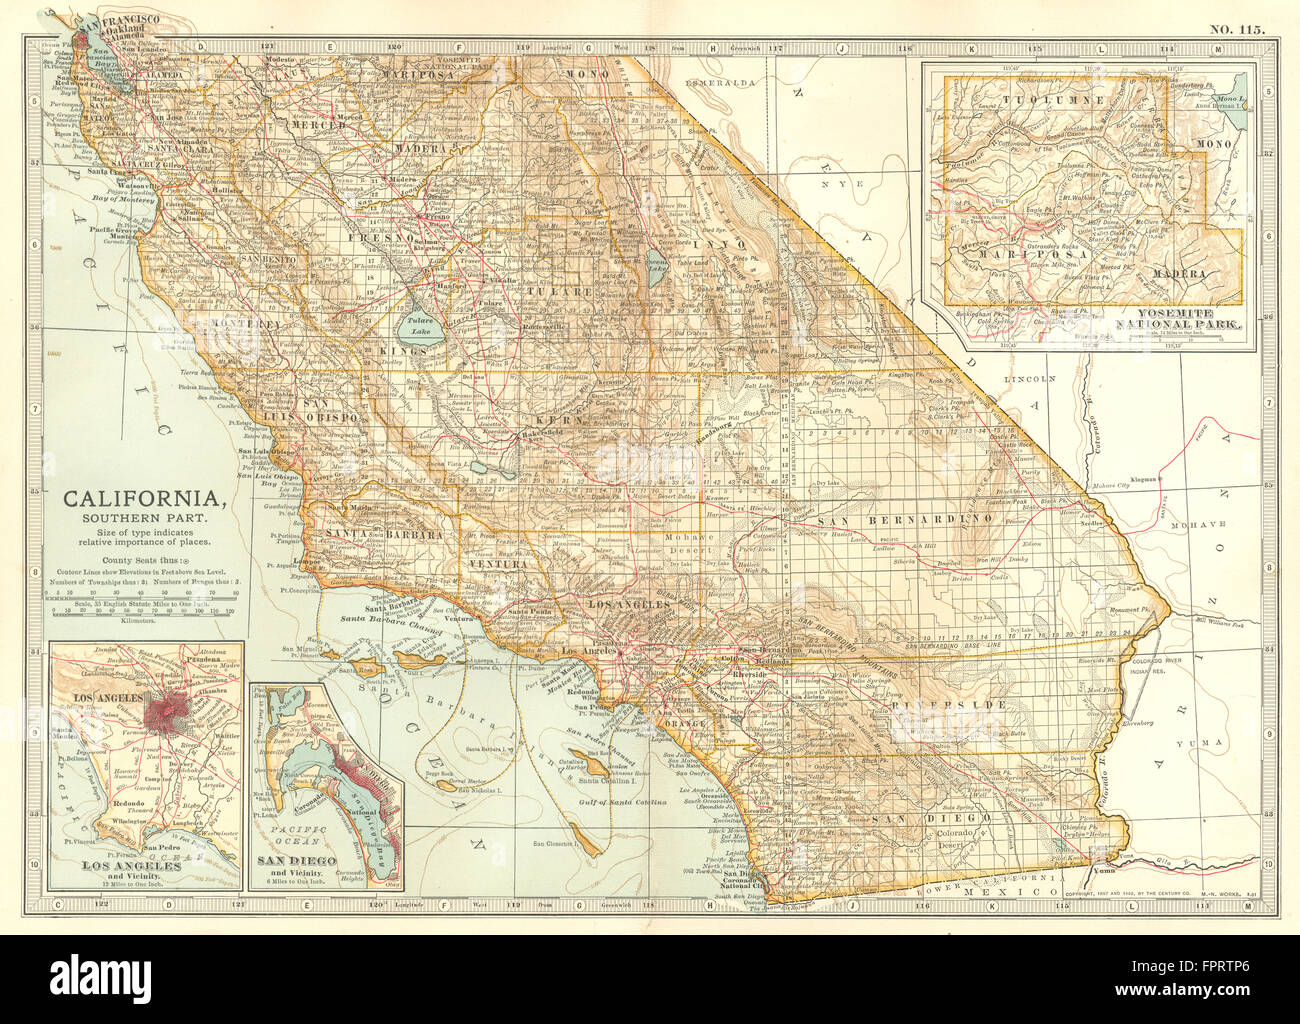 Kalifornien: Süd; Los Angeles, San Diego, Yosemite-Nationalpark, 1903 Karte Stockfoto